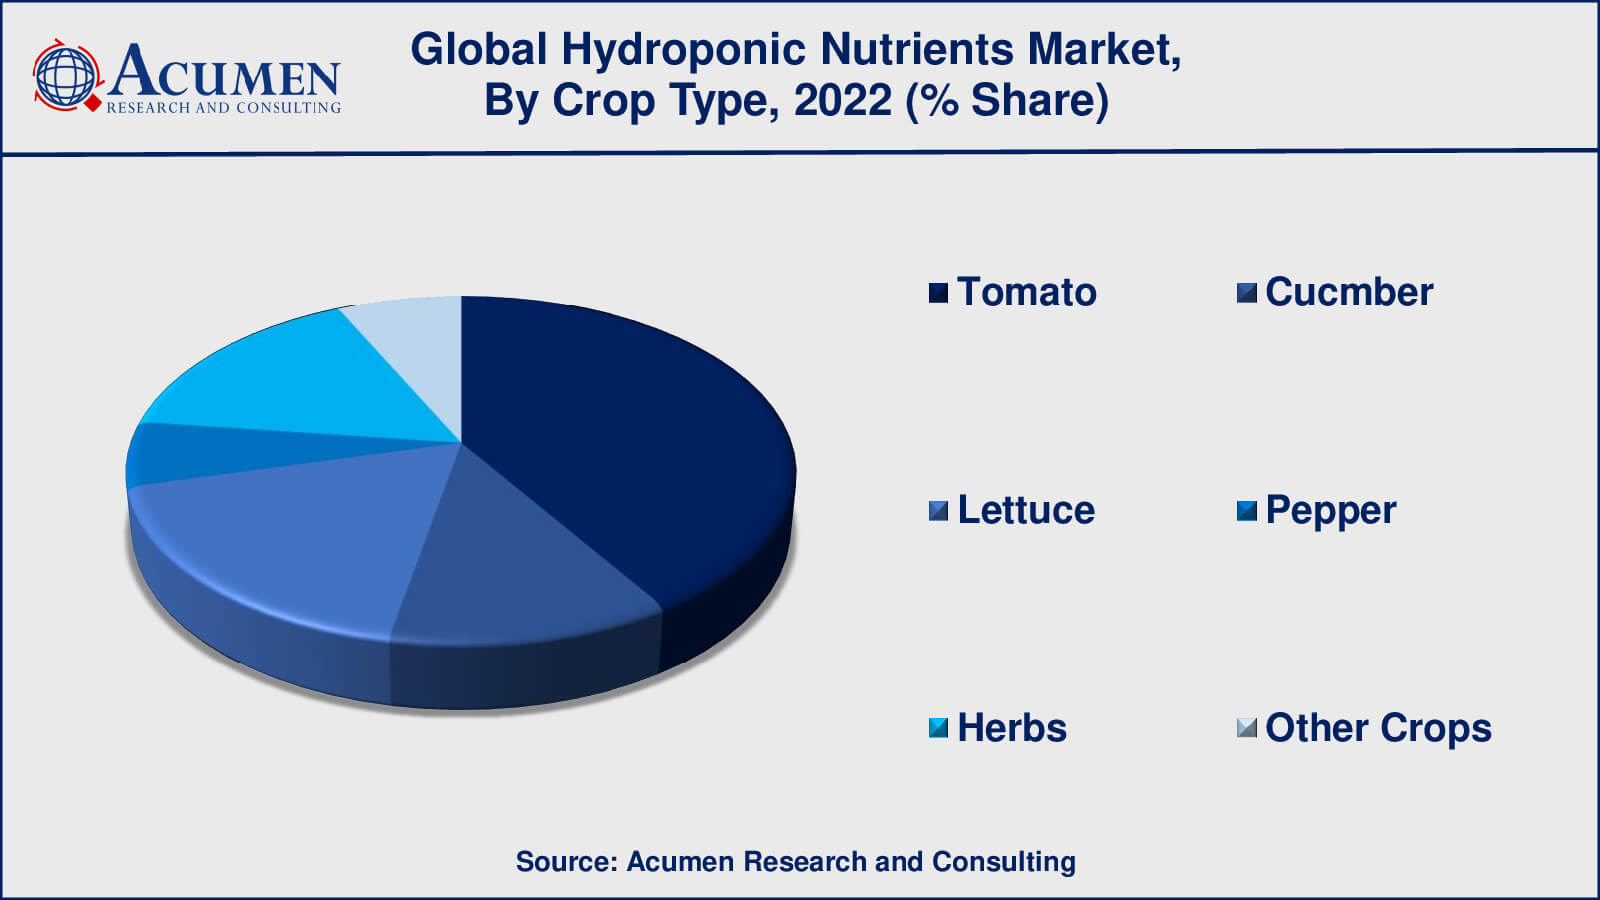 Hydroponic Nutrients Market Drivers